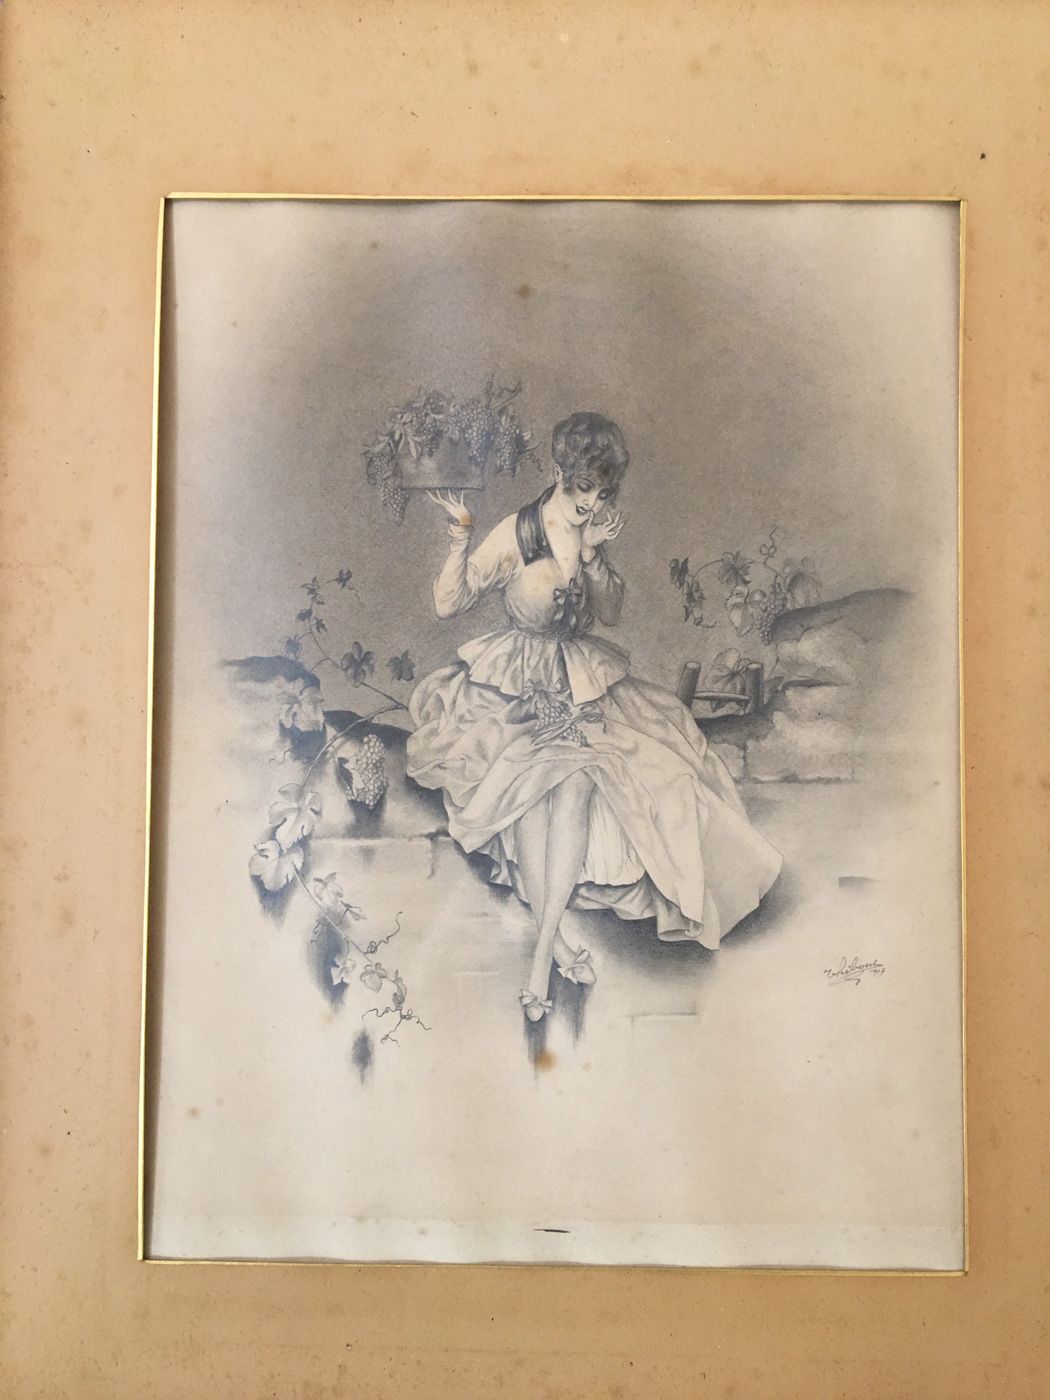 Null 
R.HIBOUT。采摘葡萄的妇女。采摘苹果的妇女。2张铅笔画，约1920年，45 x 32厘米。在底部签名。日期为1917年。